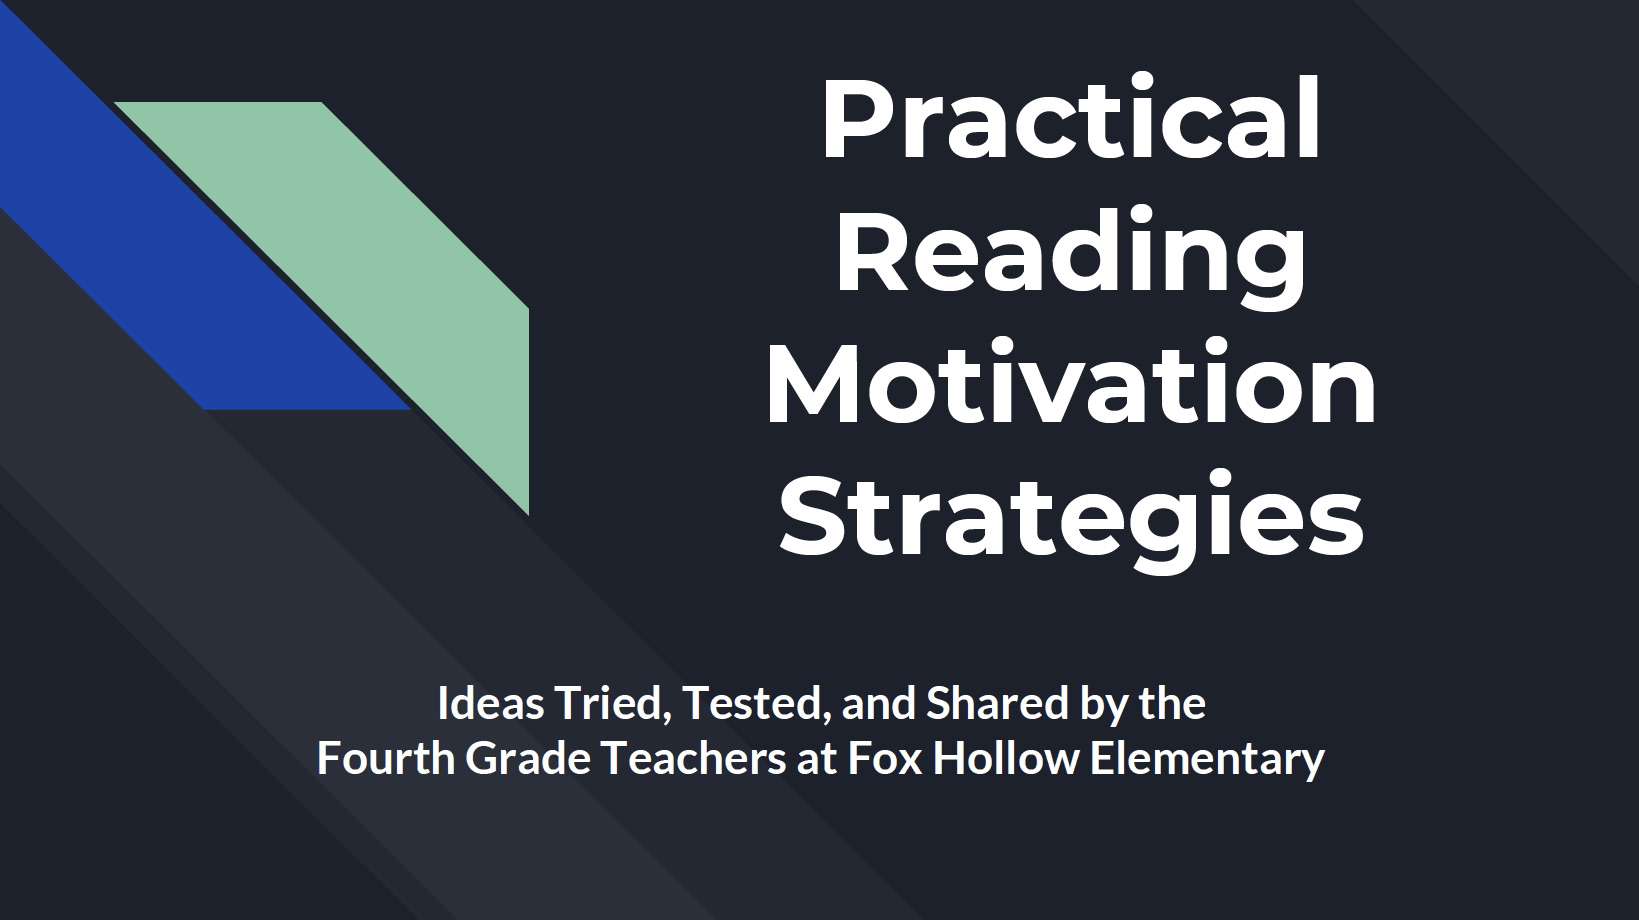 Practical Reading Strategies powerpoint slides